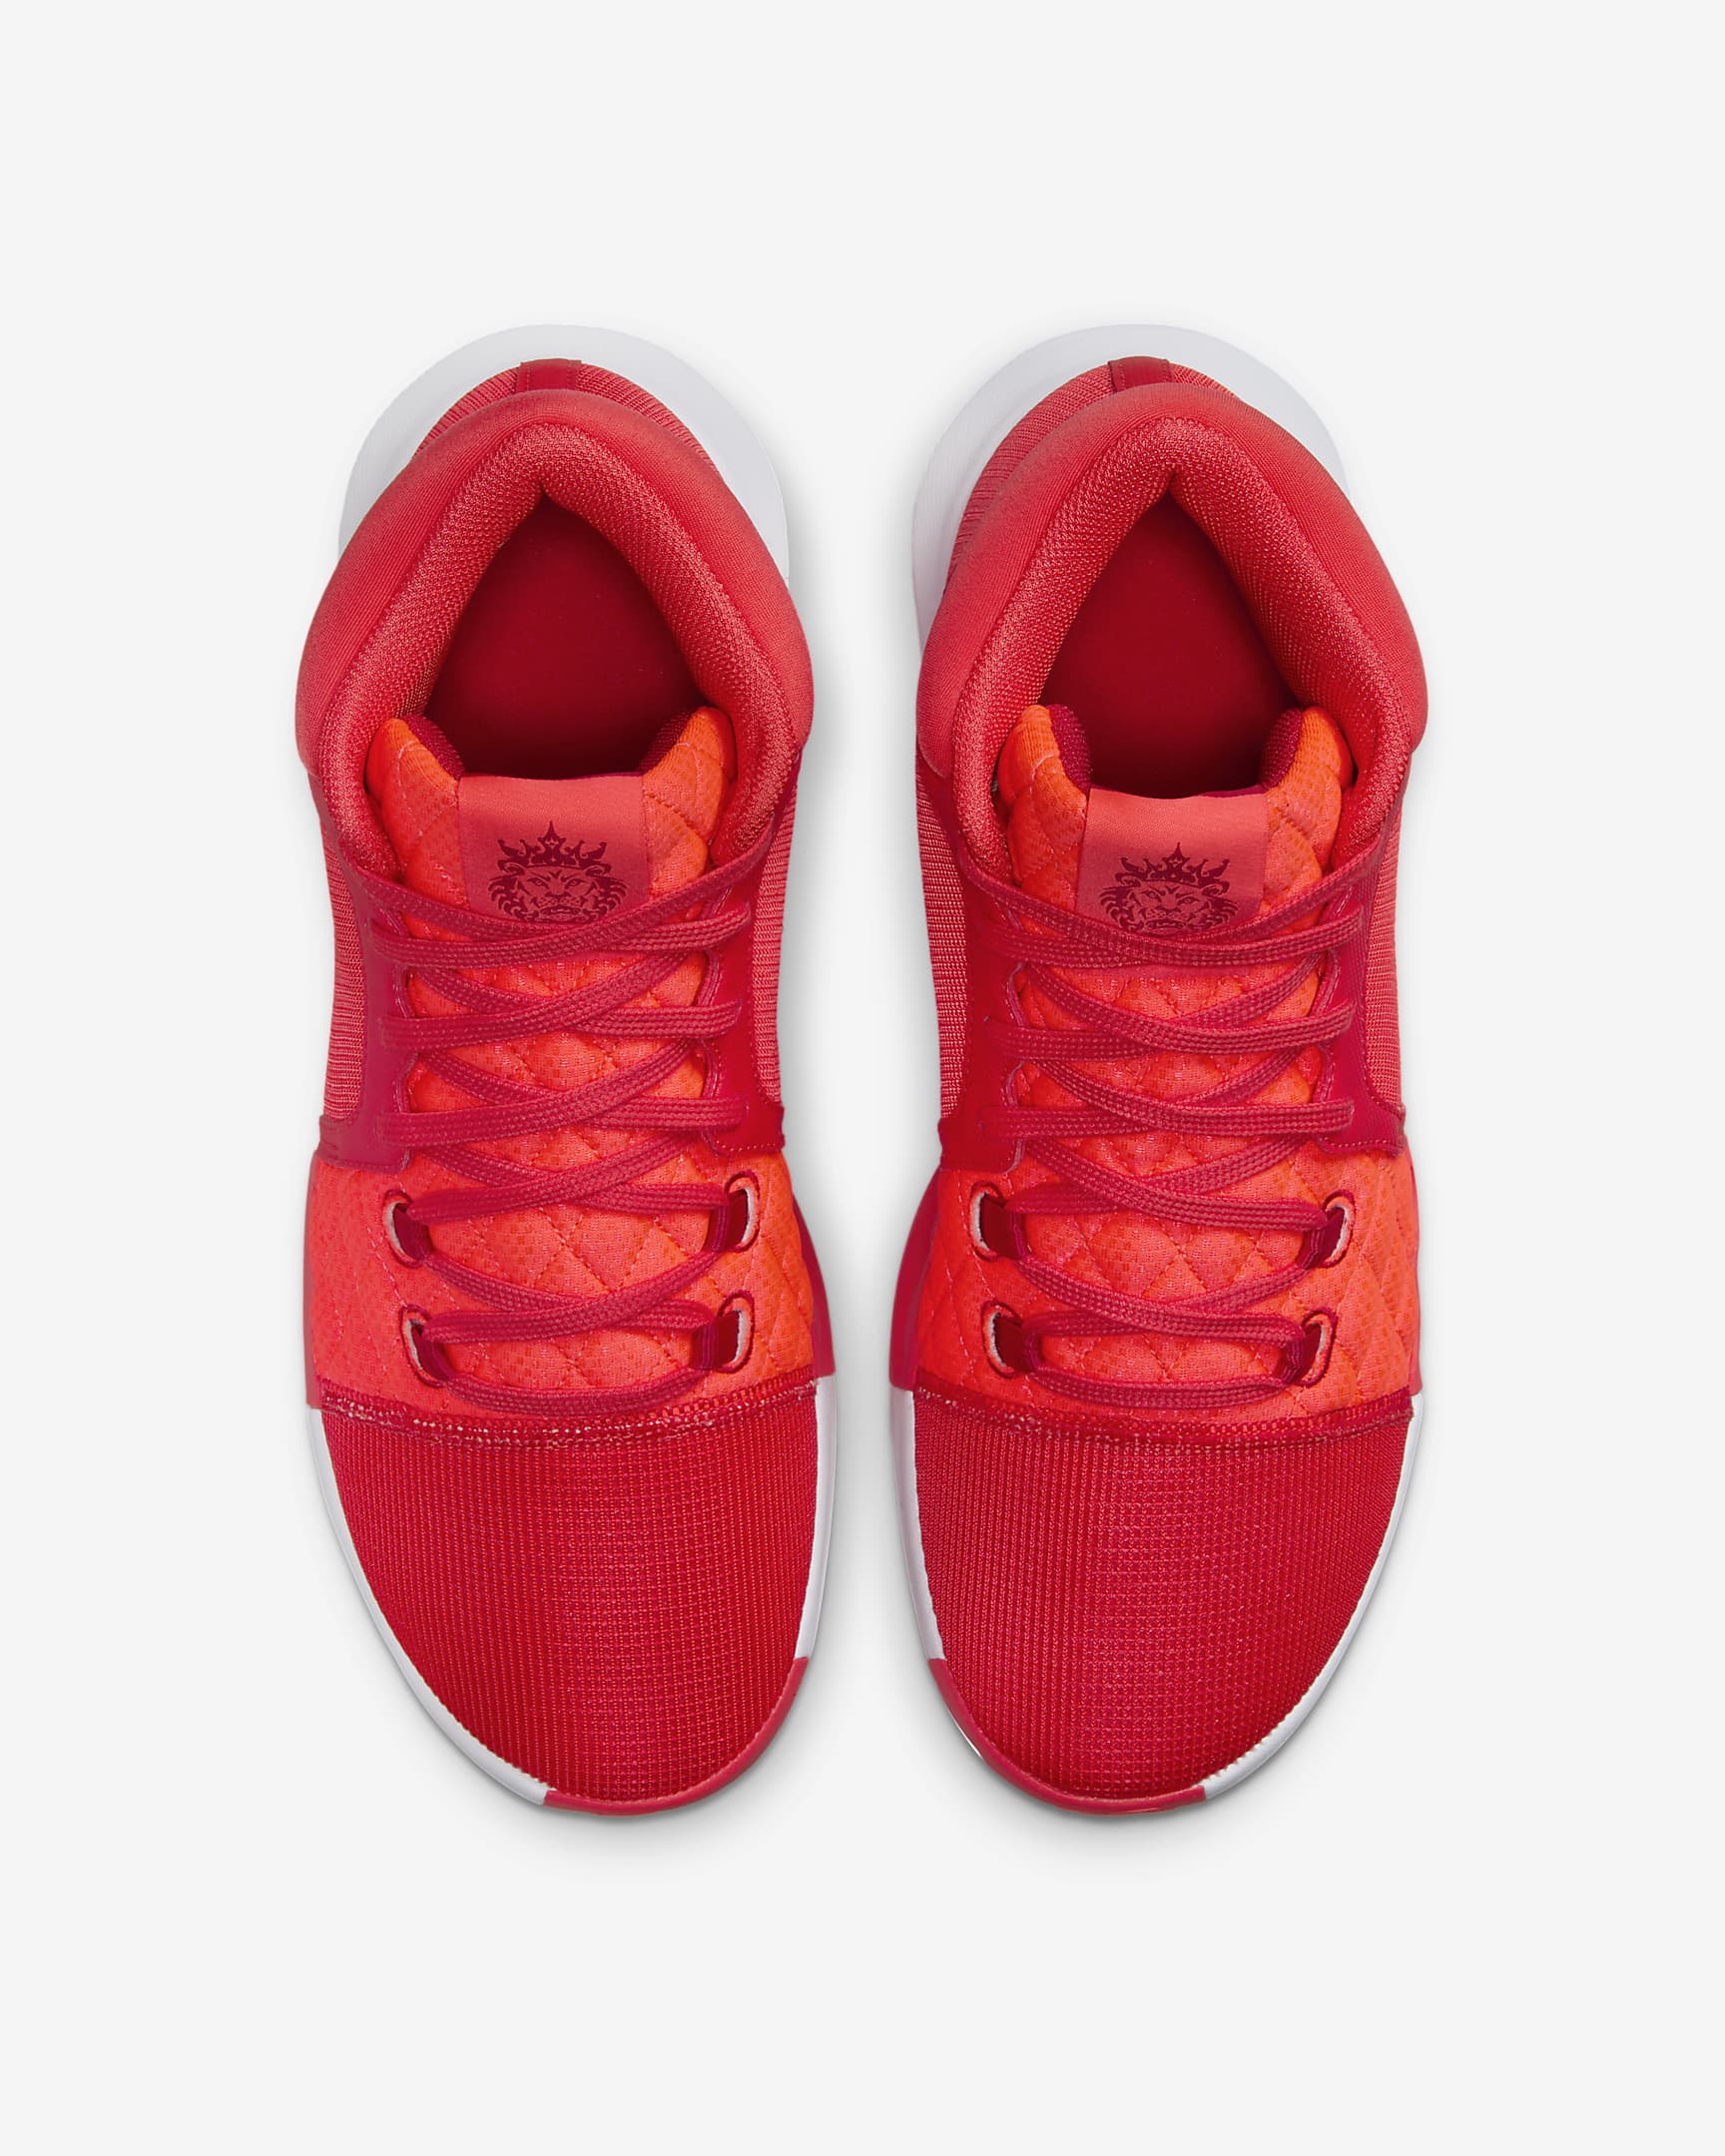 Chaussure de basket LeBron Witness 8 - Light Crimson/Bright Crimson/Gym Red/Blanc